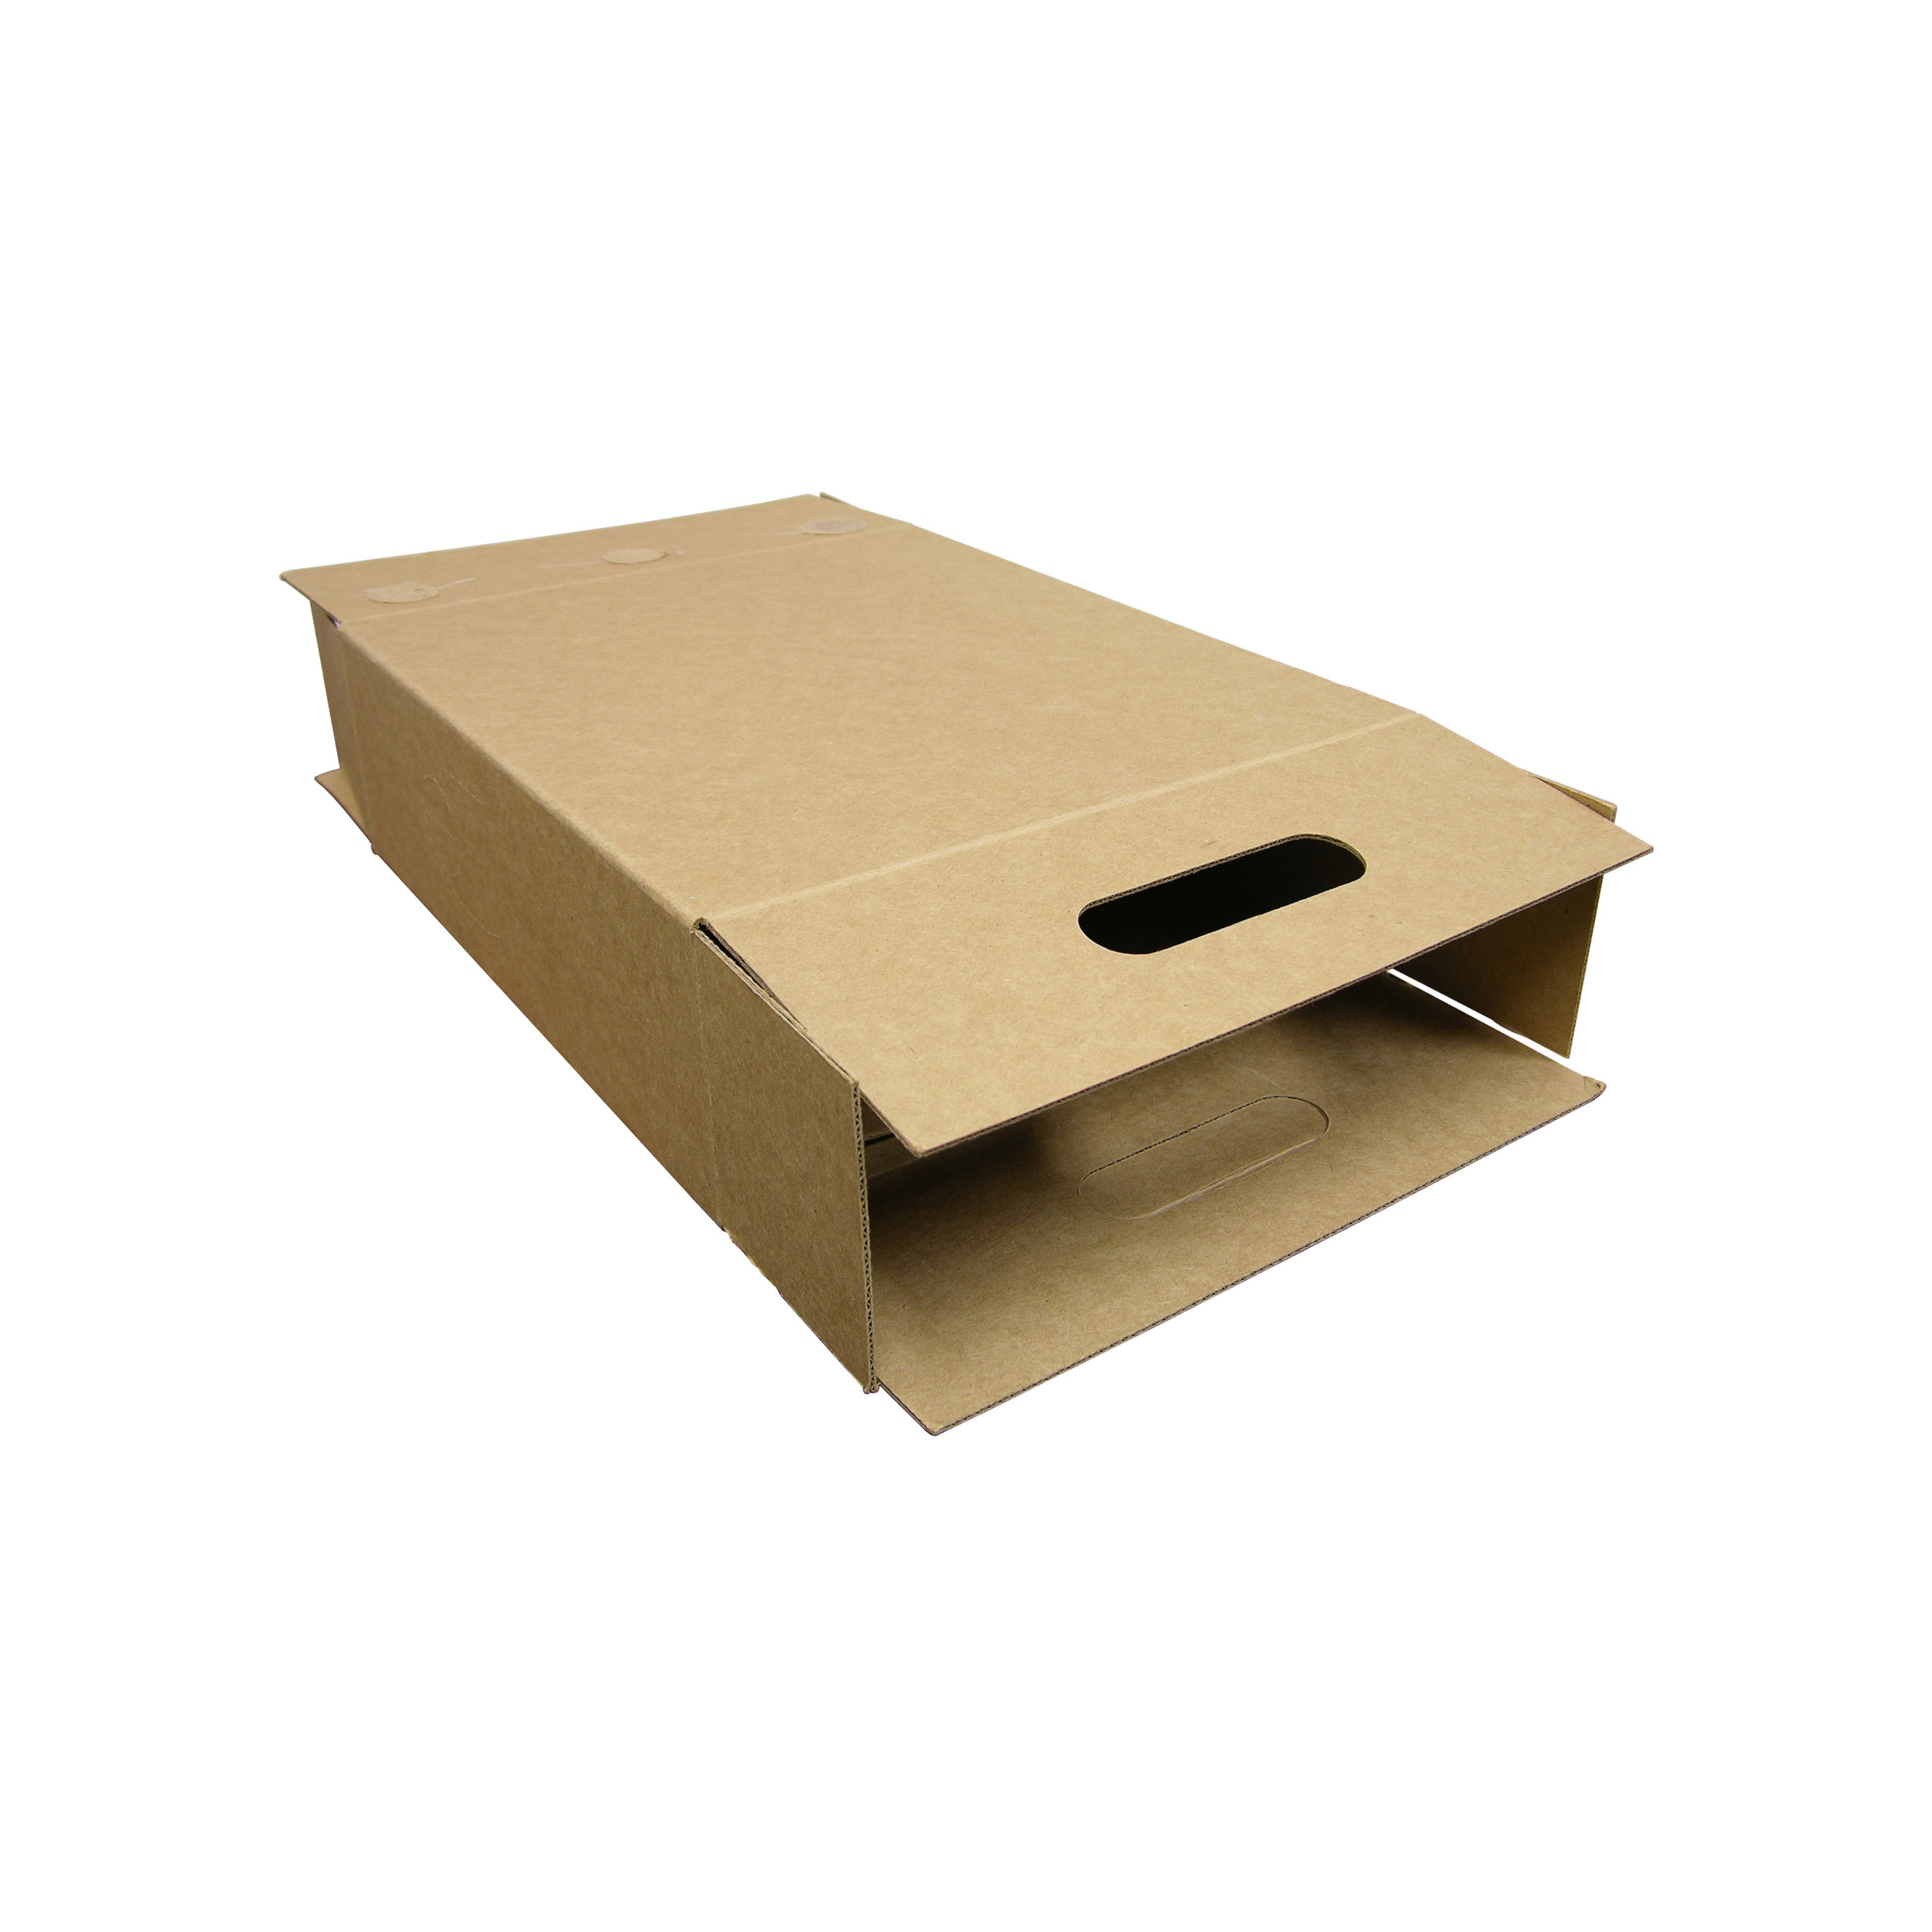 Bag-in-Box (BIB), Packaging